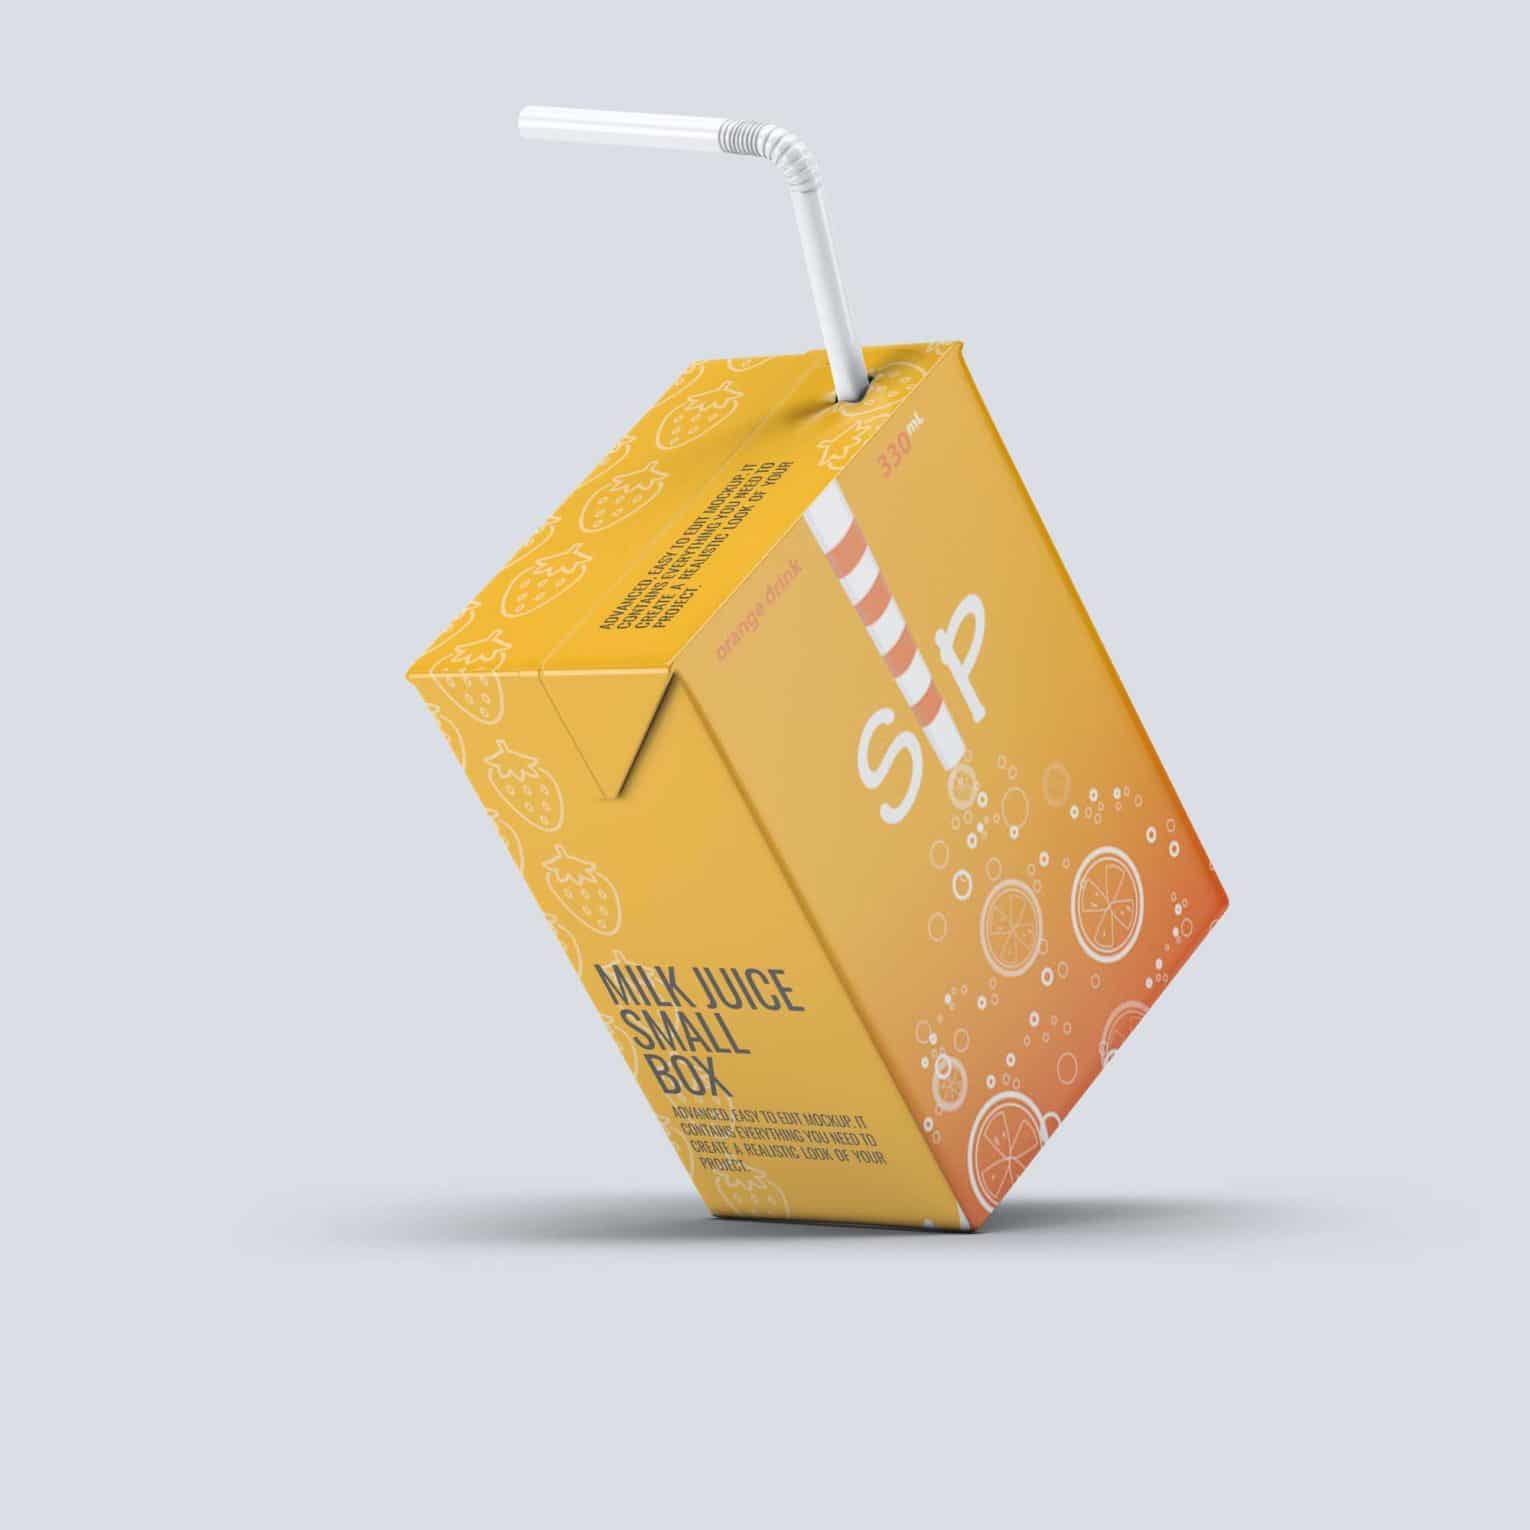 Juice Box PSD Mockup Download For Free | DesignHooks